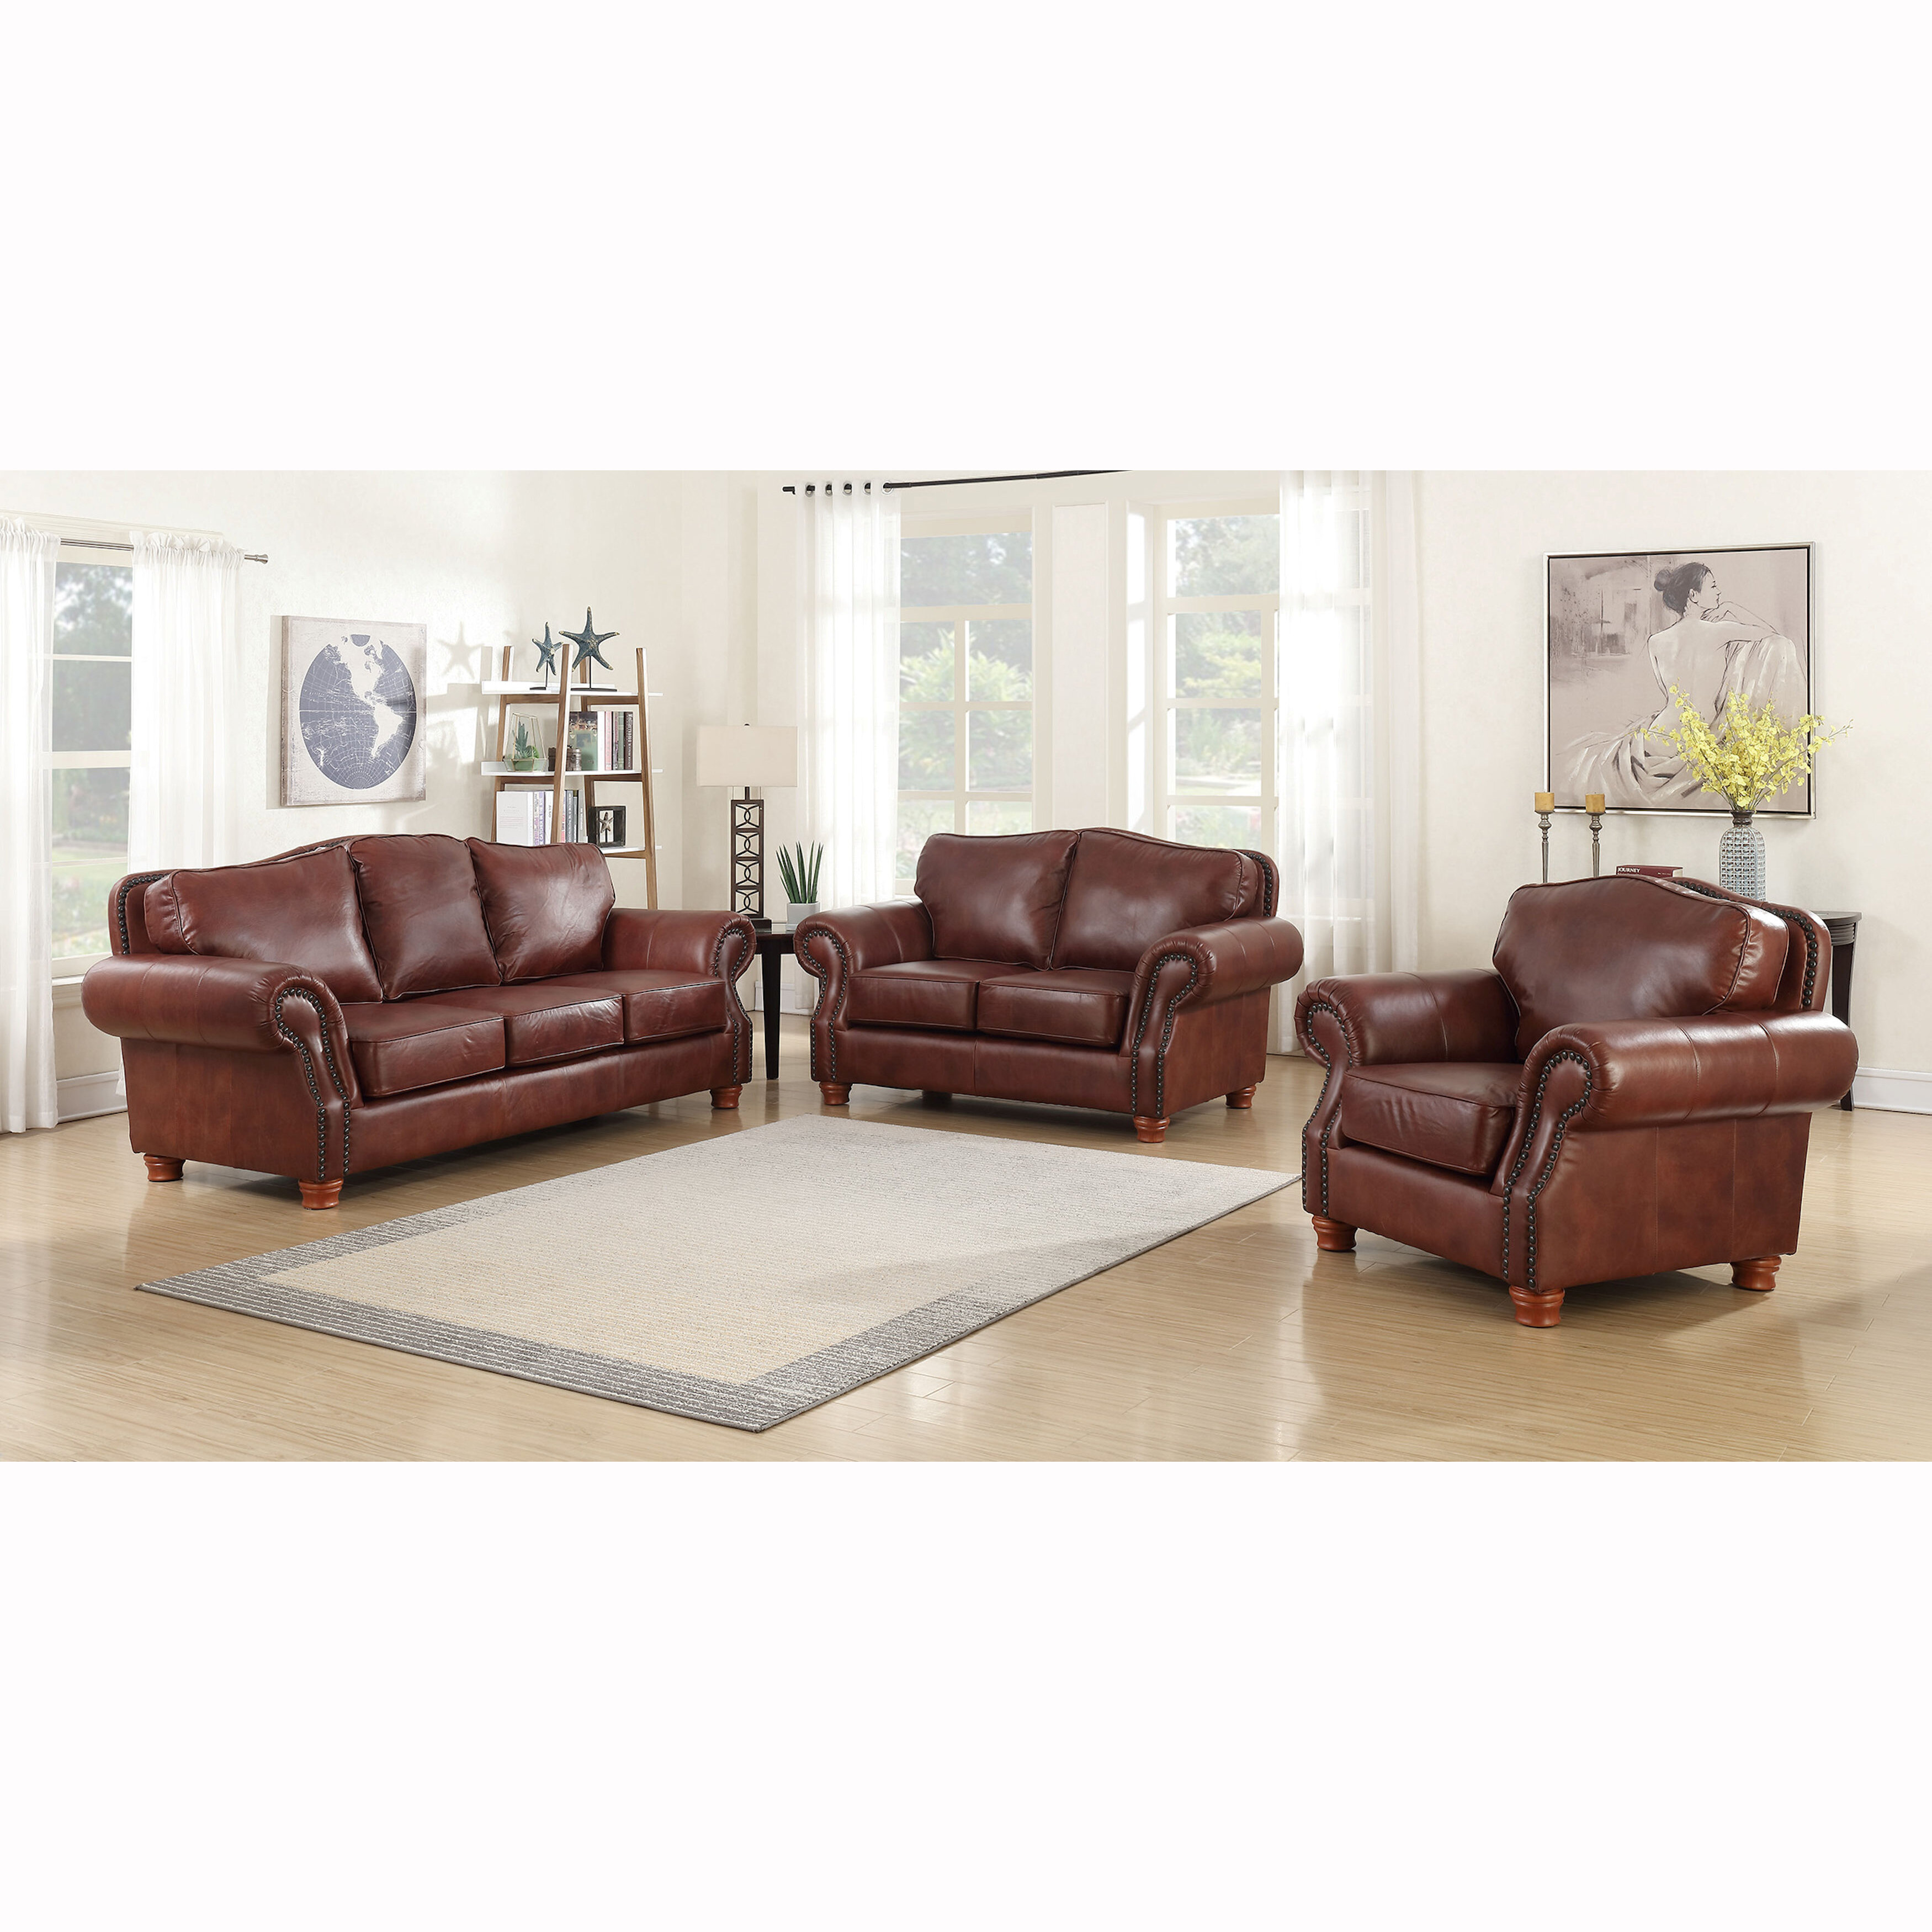 Canora Grey Vranduk 3 Piece Leather Living Room Set Wayfair